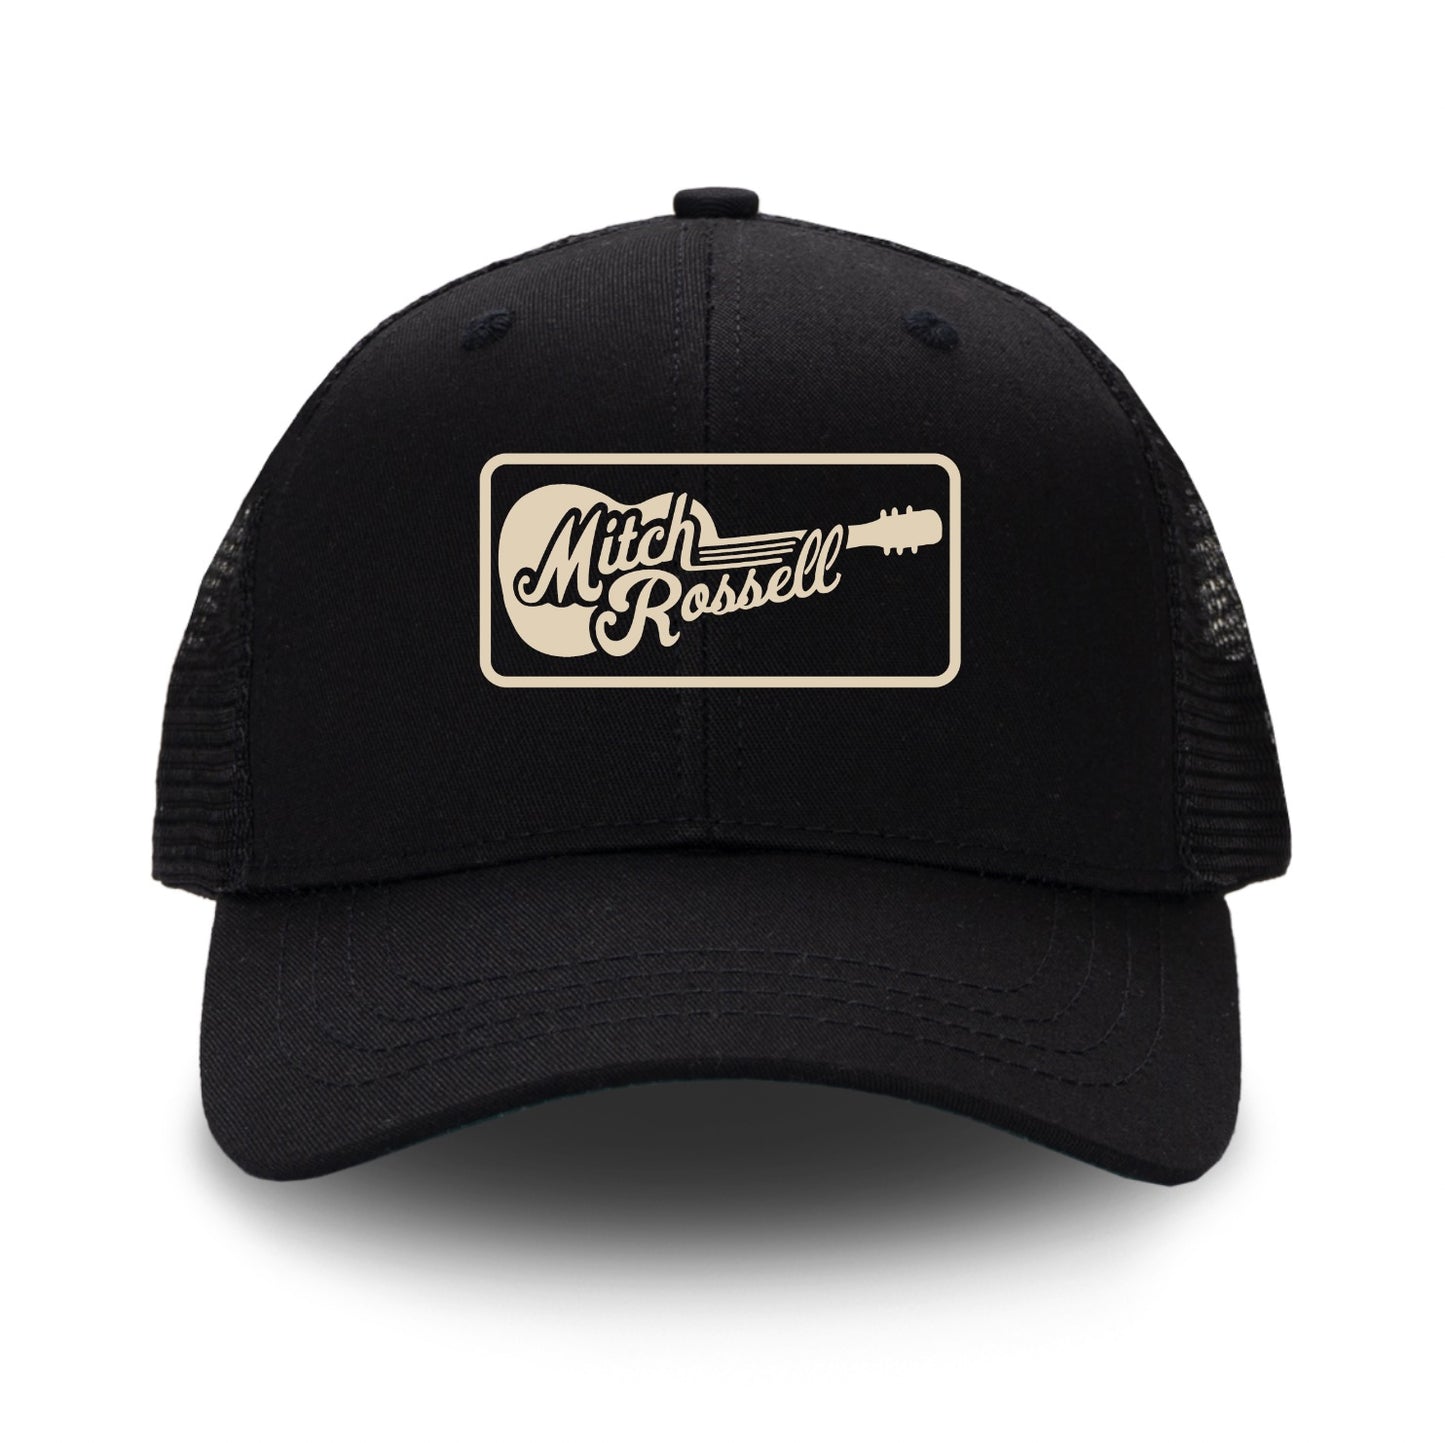 Mitch Rossell, Black Mesh Hat